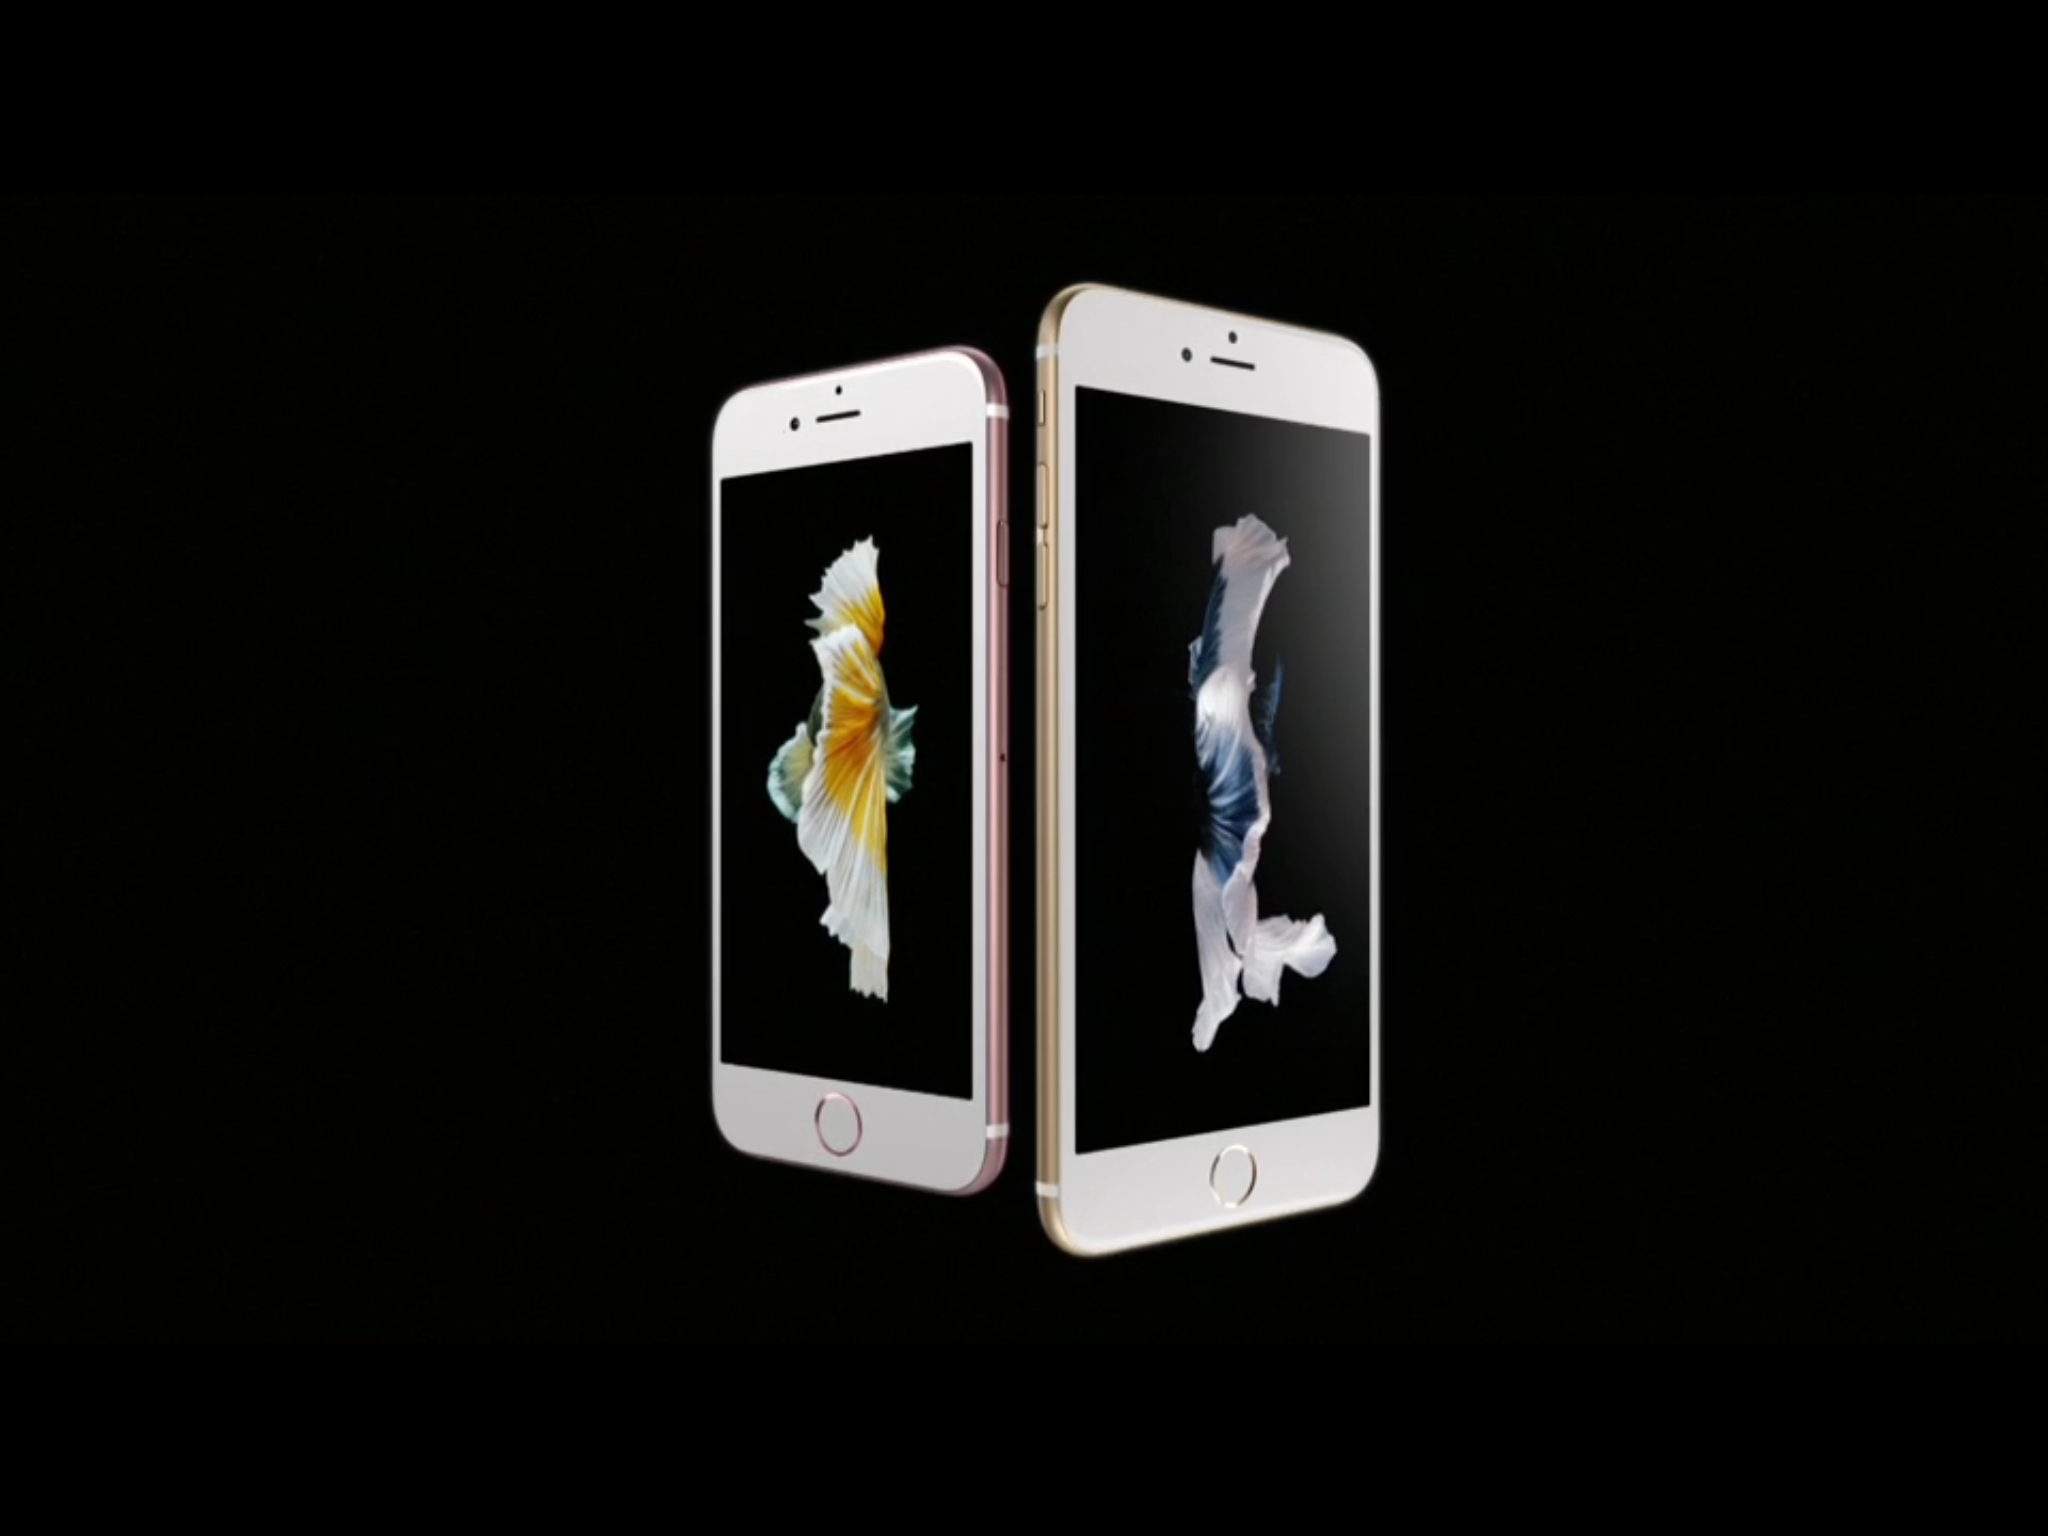 Apple announces new iPhone 6s